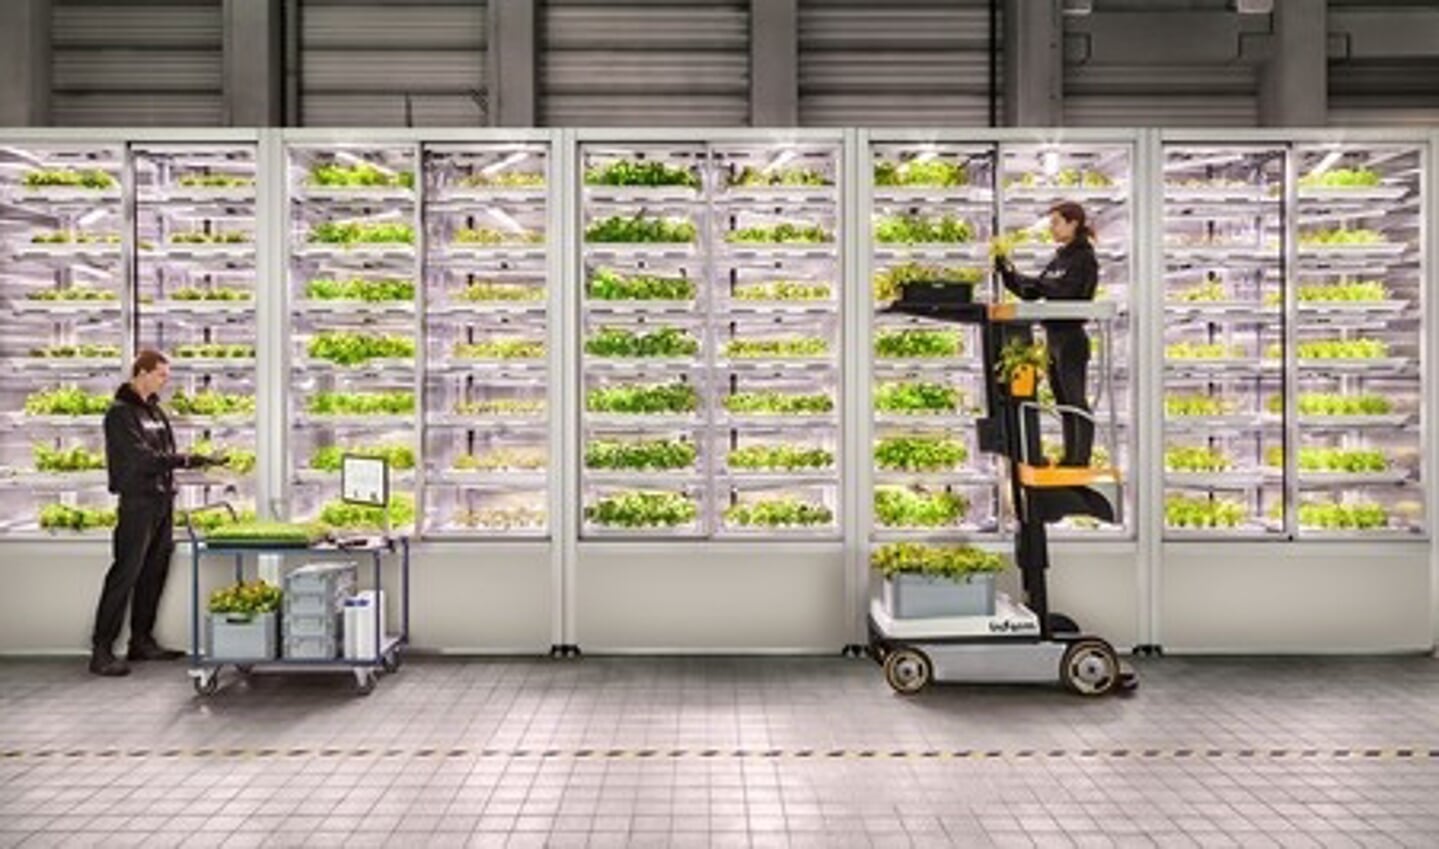 Het Duitse ‘vertical farming’ bedrijf Infarm